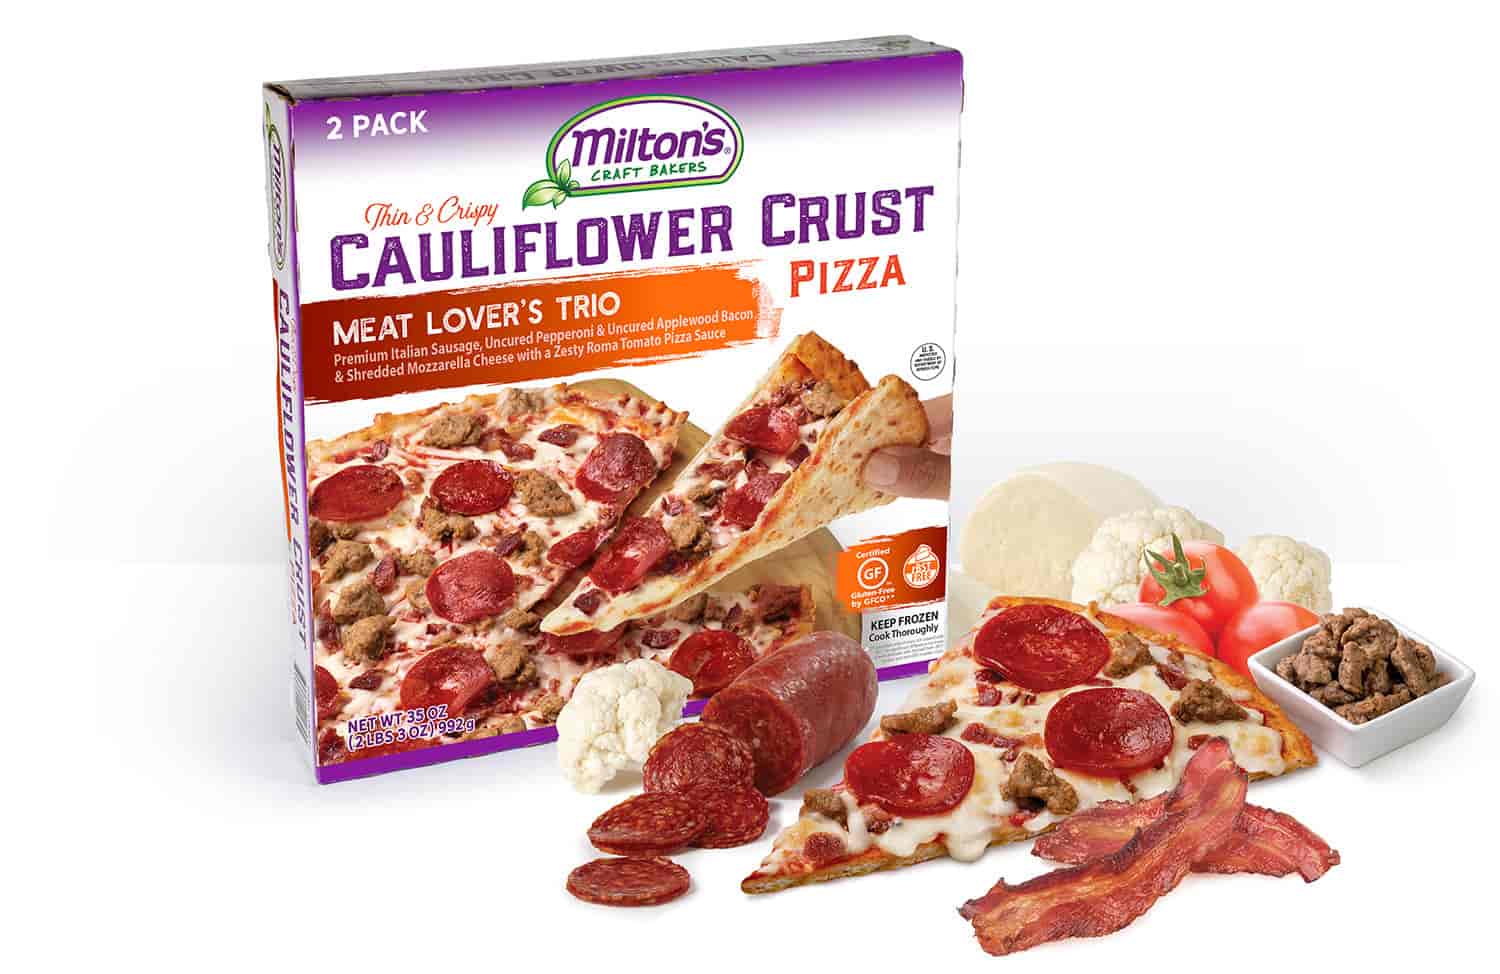 Costco Cauliflower pizza crust